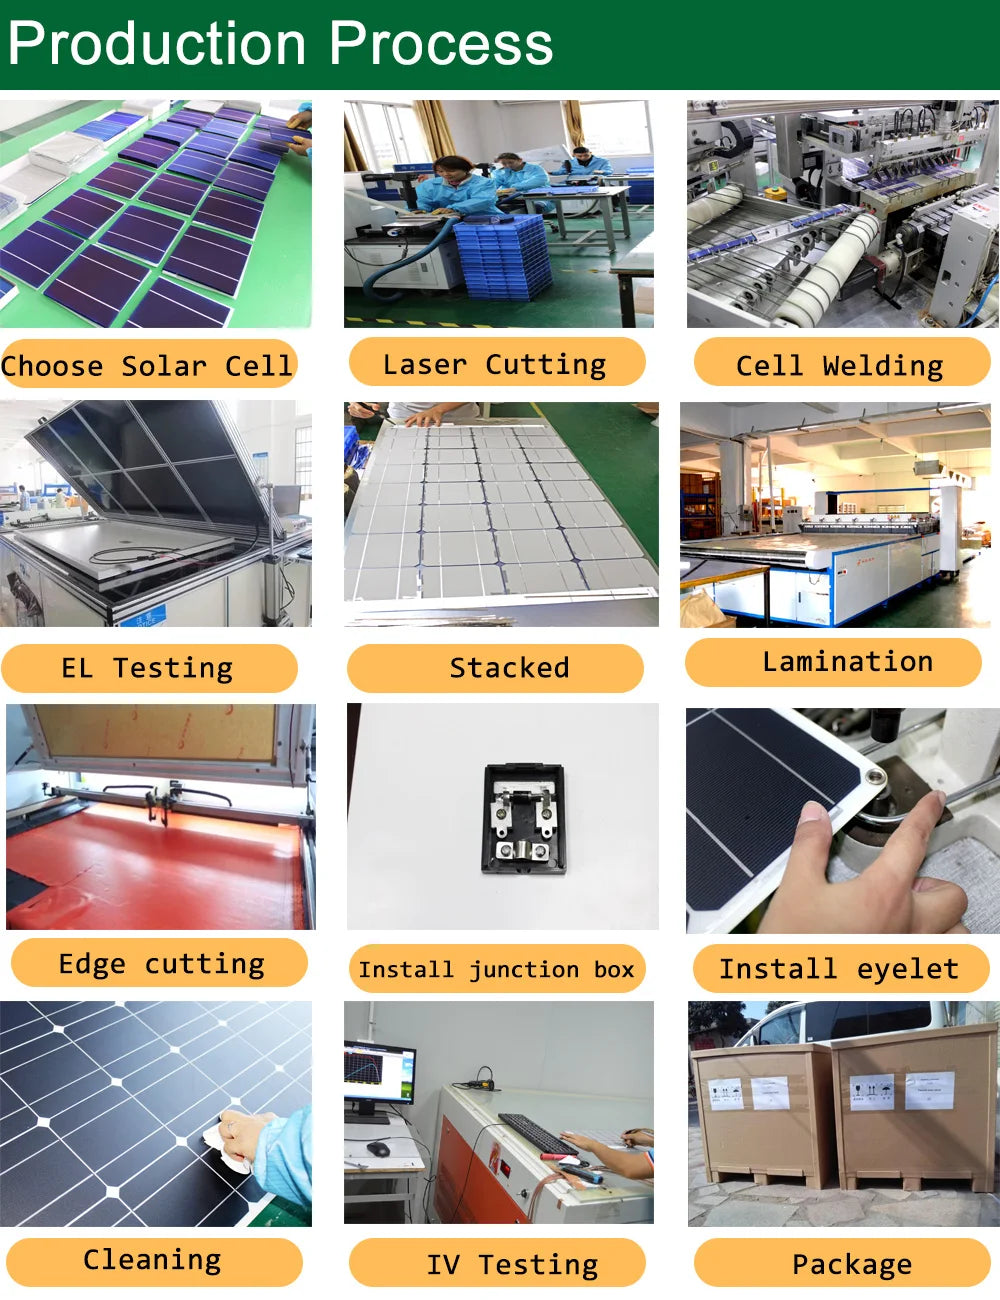 300w solar panel, Manufacturing process: laser cutting, welding, testing, stacking, lamination, installation, cleaning, and testing for solar panel production.